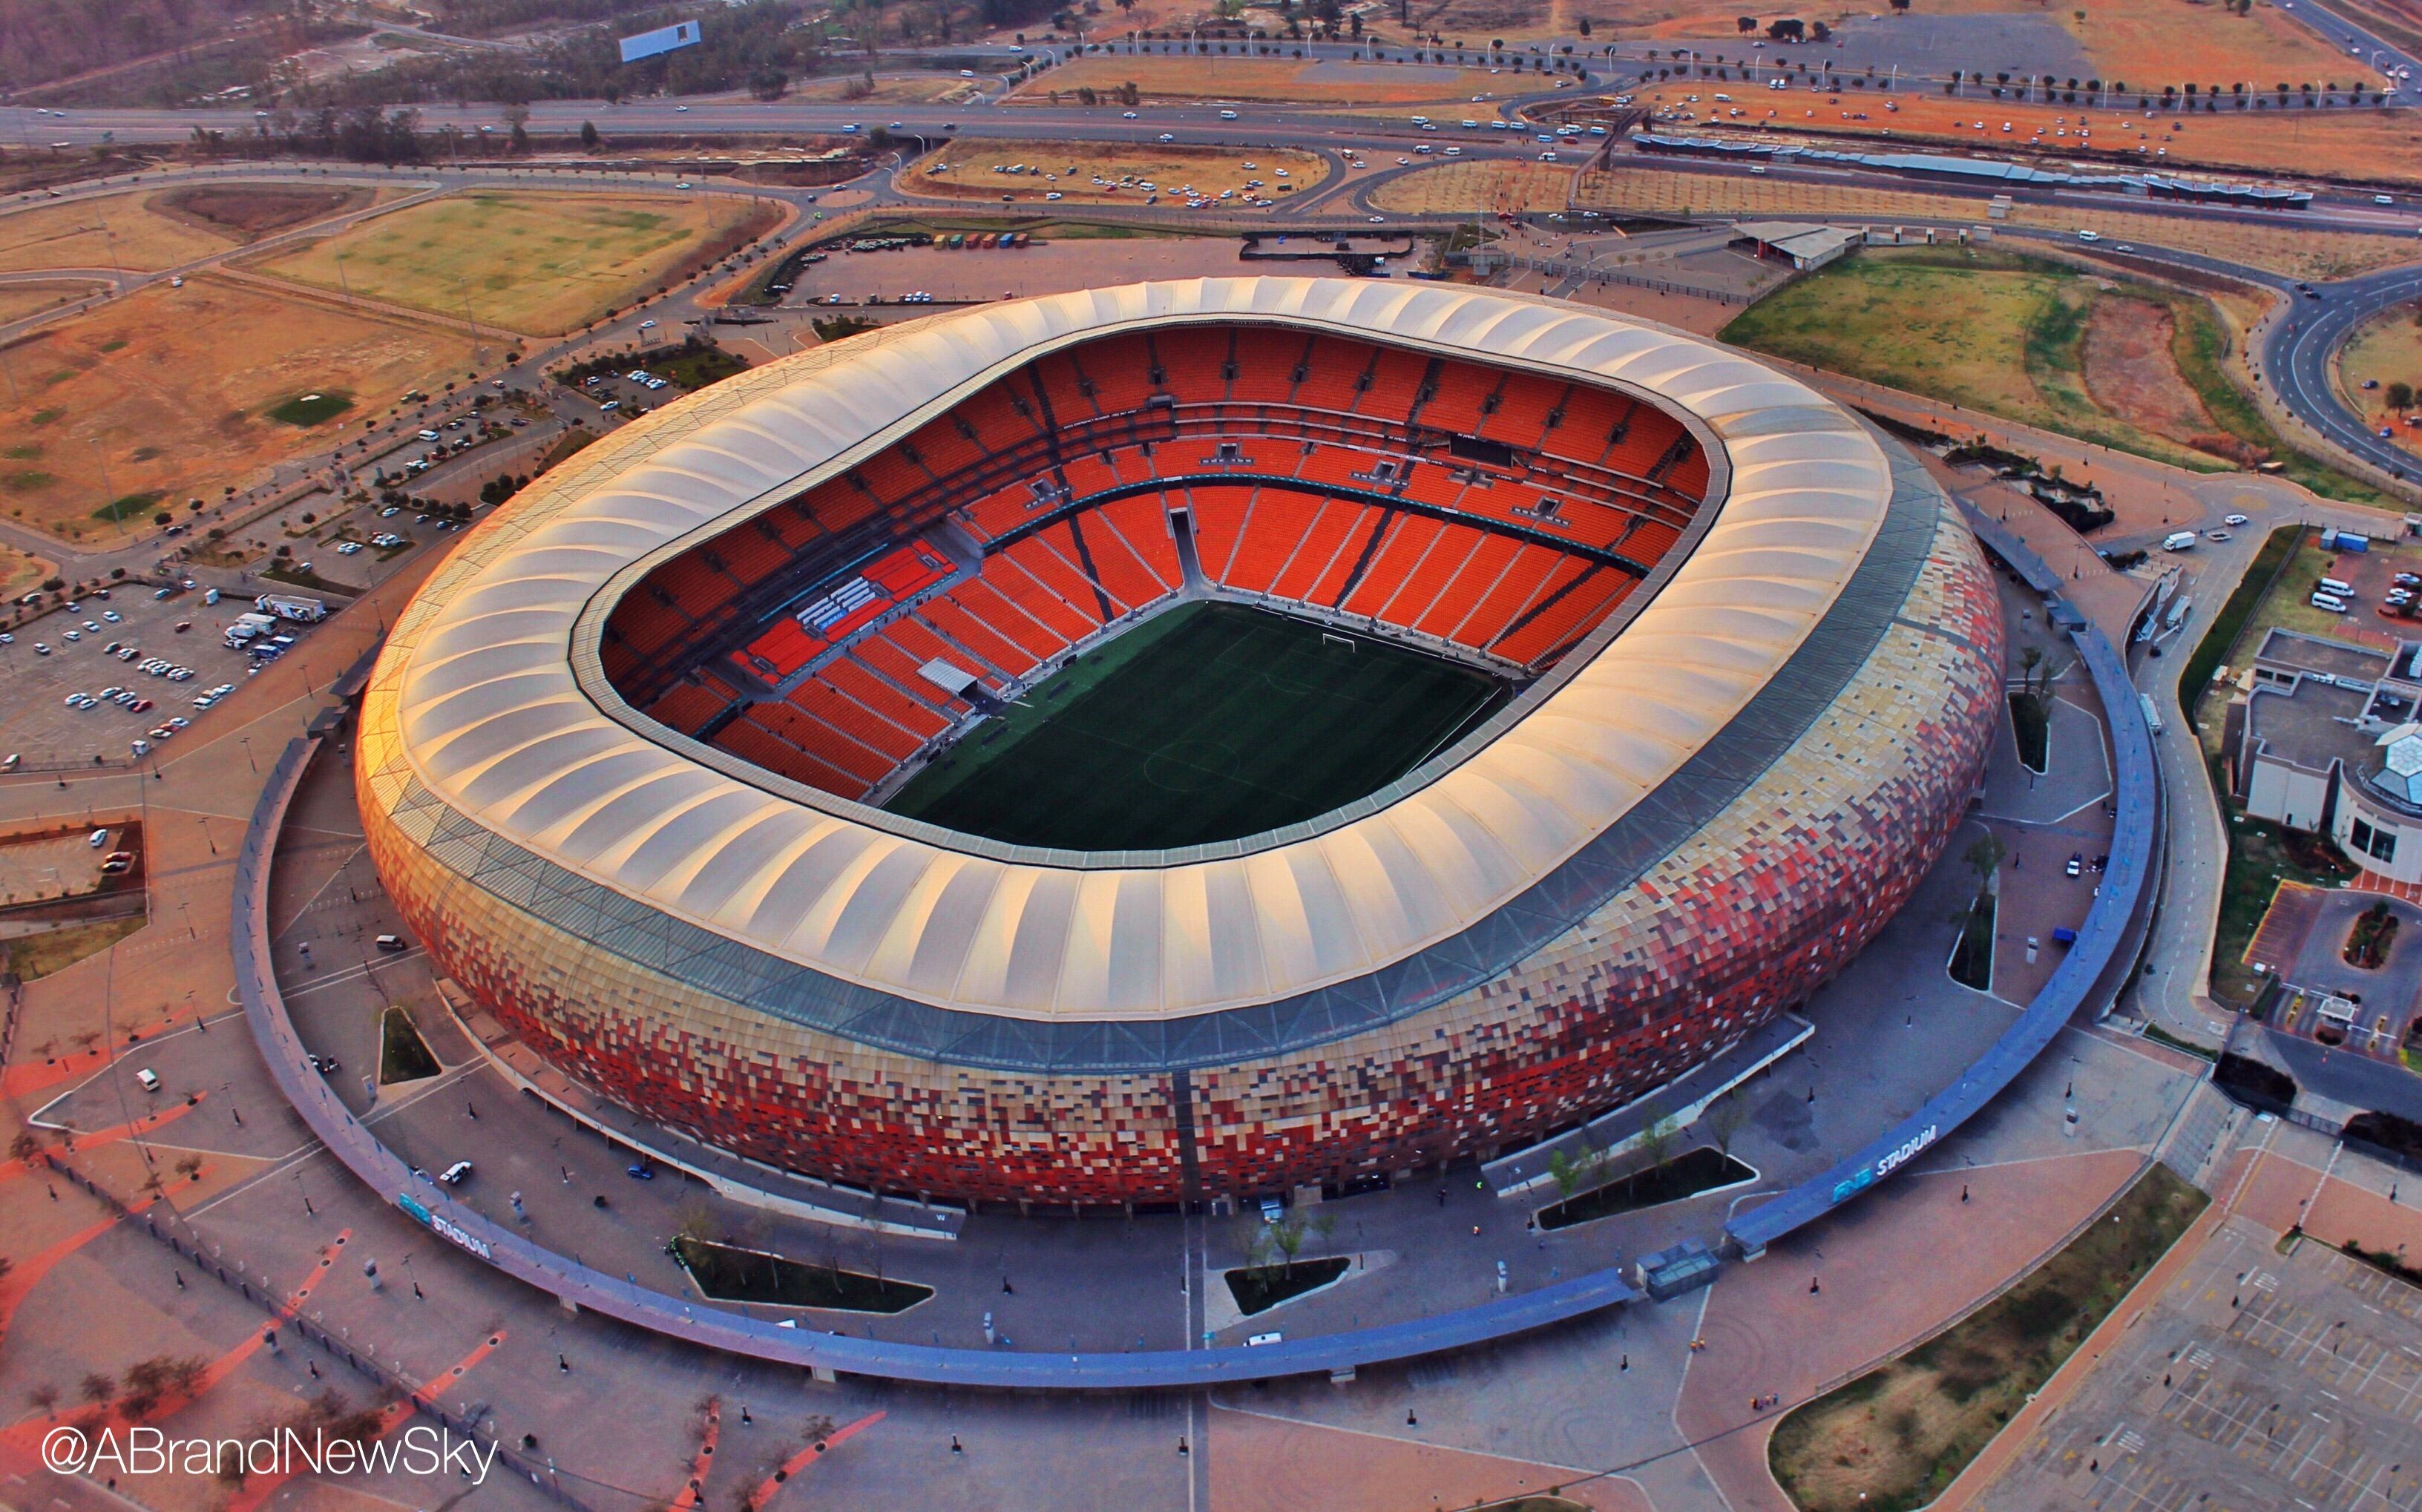 Топ стадионов. Стадион СОККЕР Сити Йоханнесбург. СОККЕР Сити — Йоханнесбург, ЮАР. СОККЕР Сити стадион ЮАР. ФНБ Стэдиум Йоханнесбург.